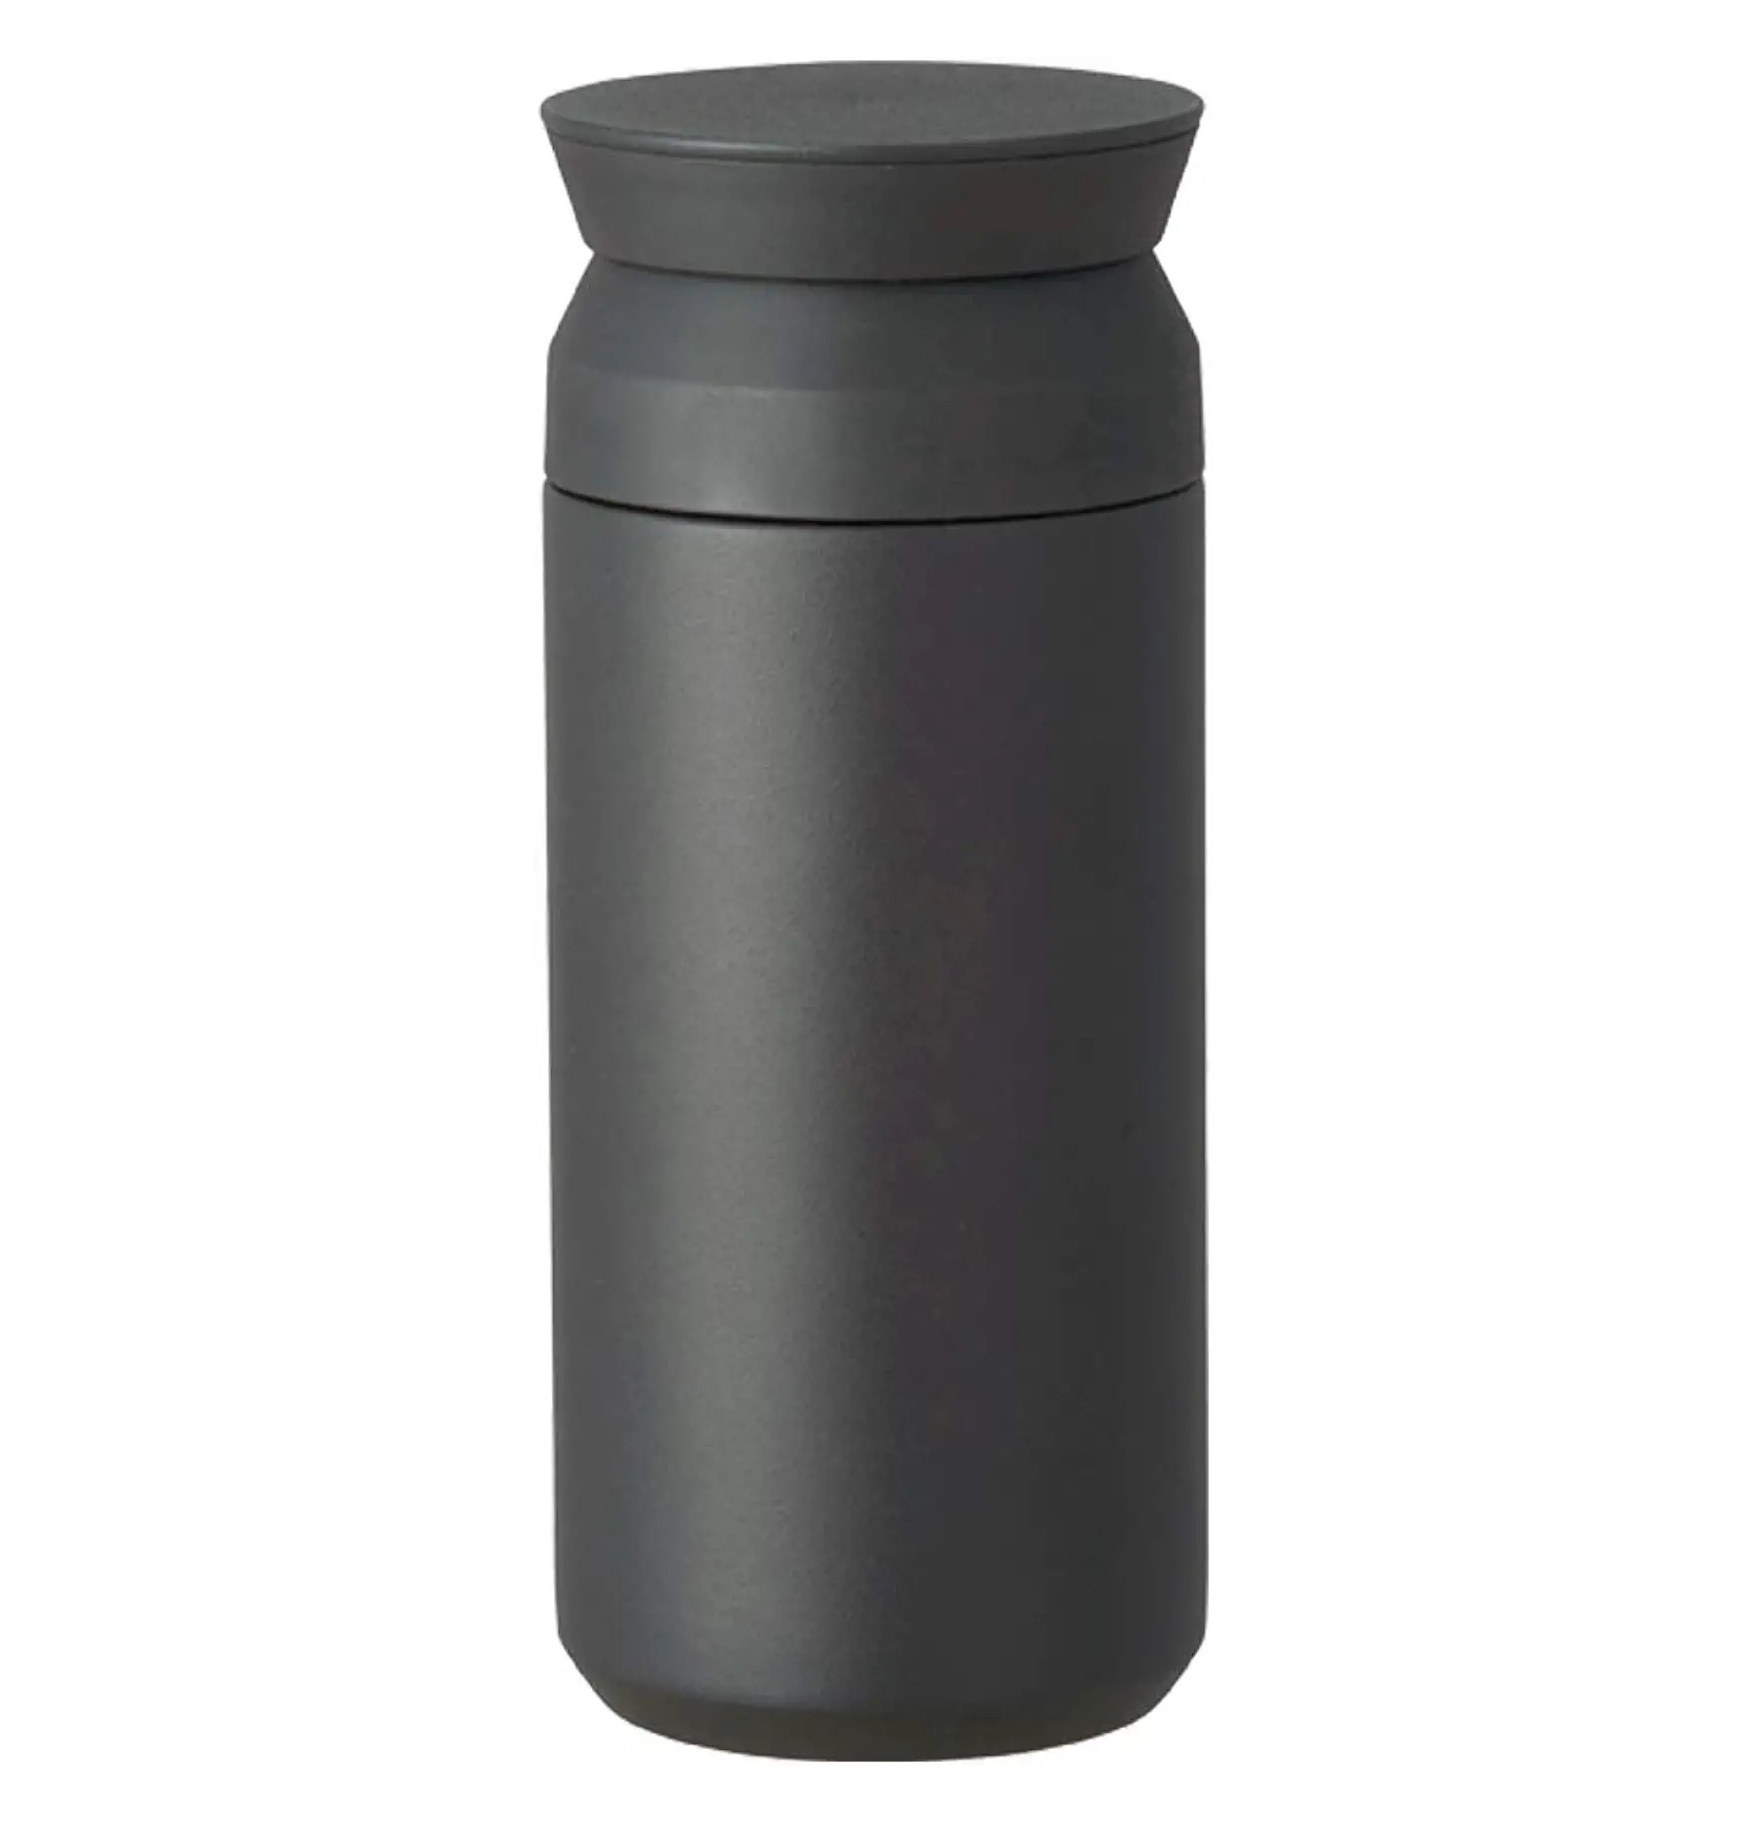 A simplistic black tumbler with angular screw top lid